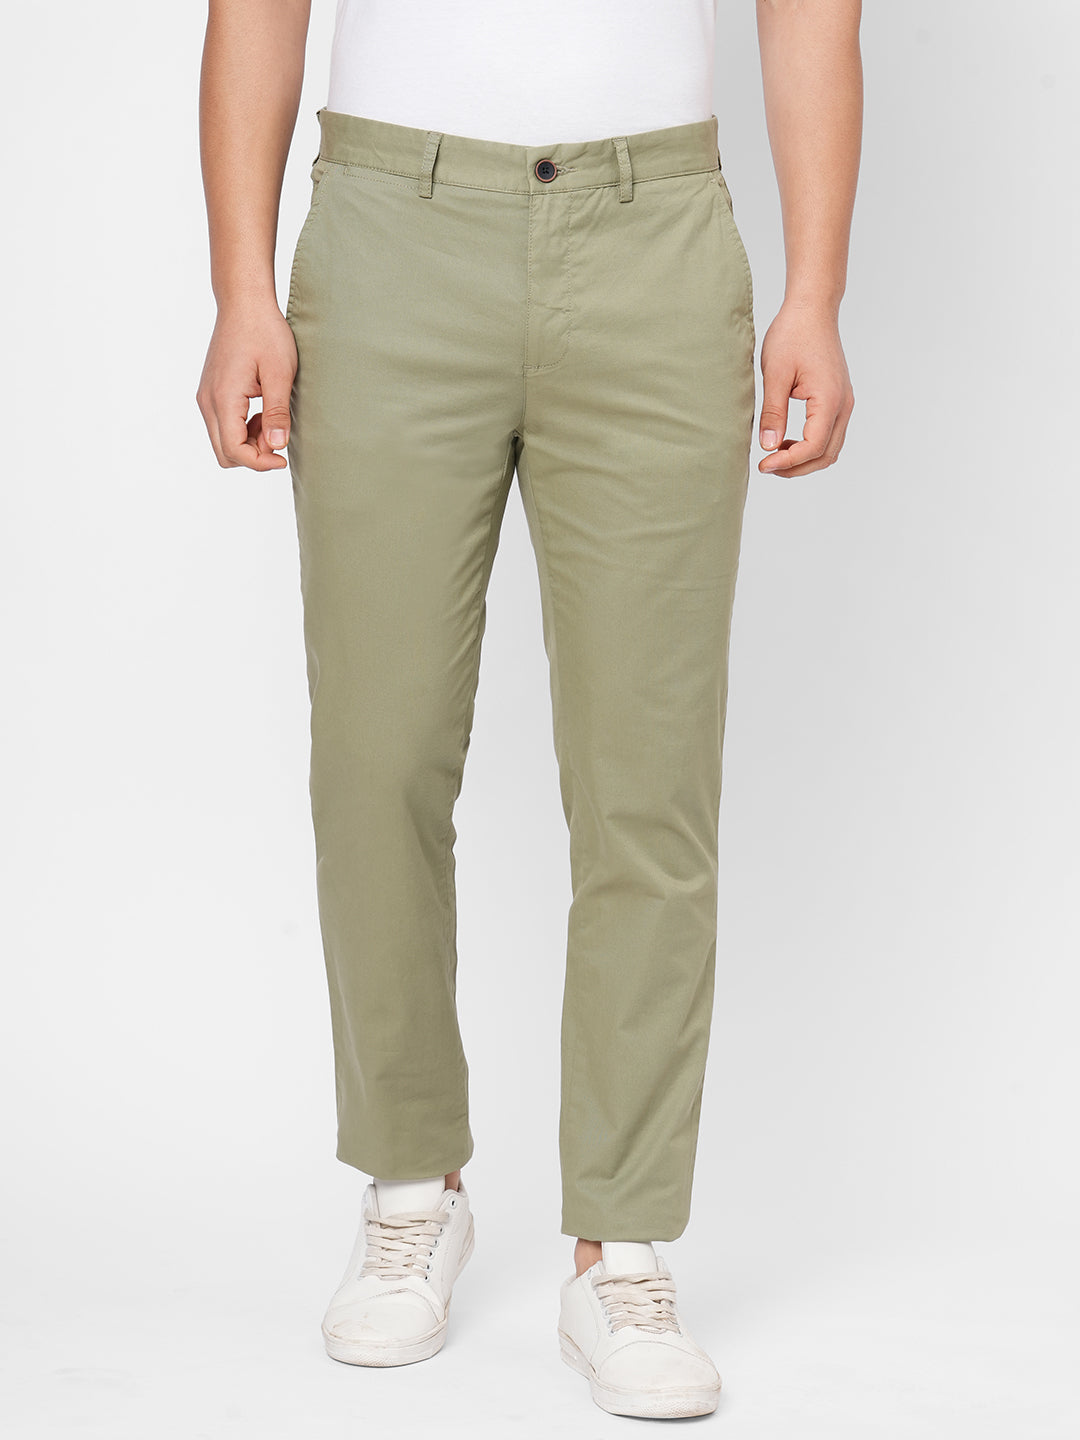 Men's Green Cotton Lycra Slim Fit Pant